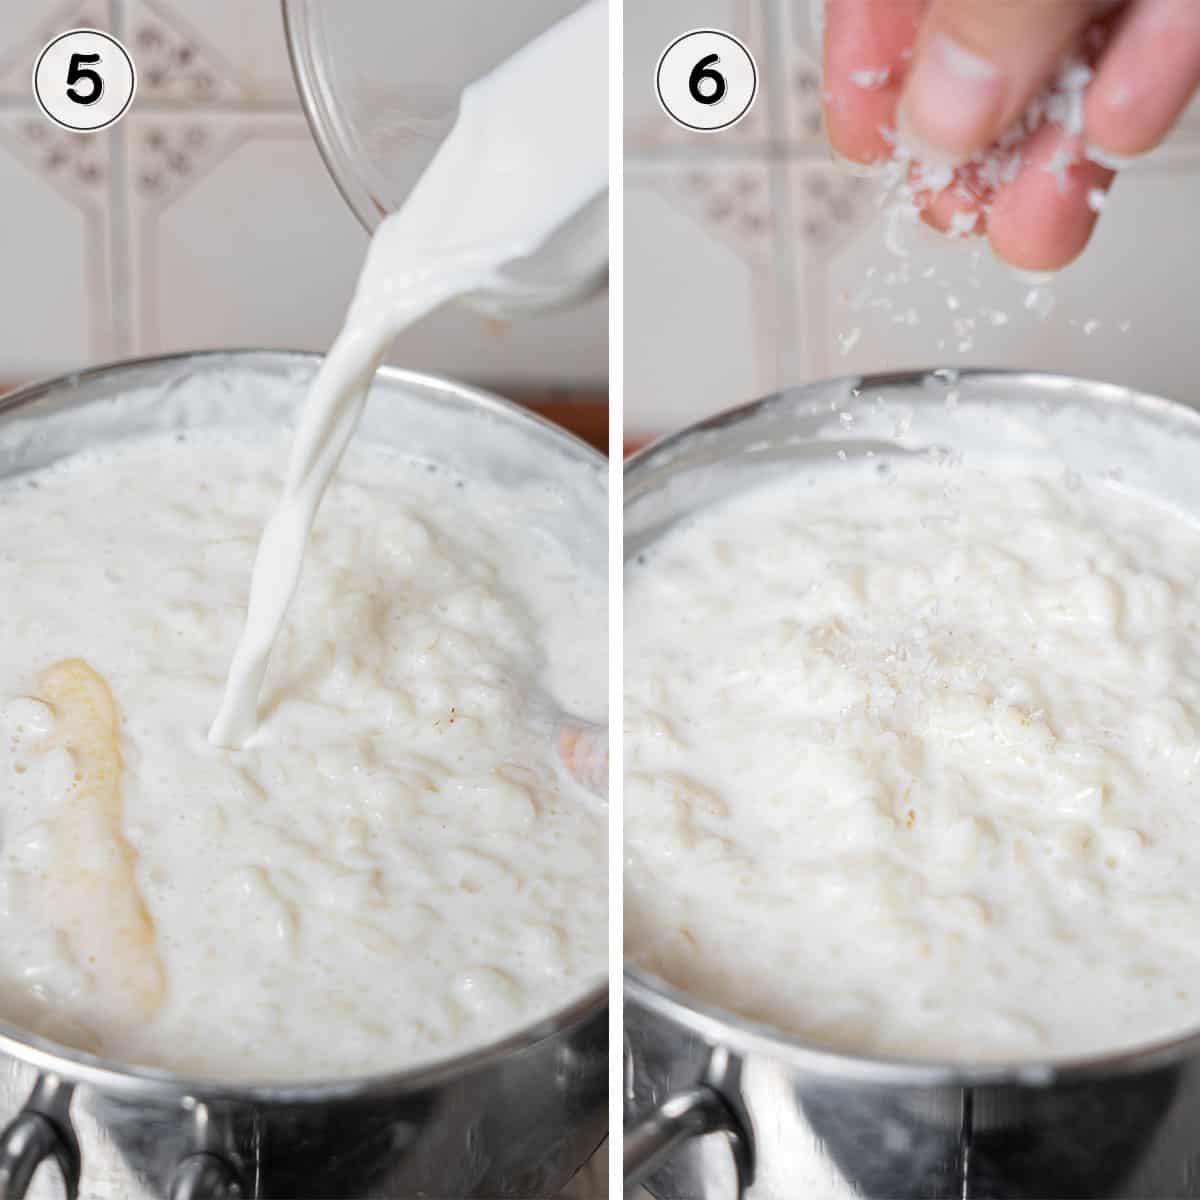 stirring and adding the remaining milk, then adding the salt.